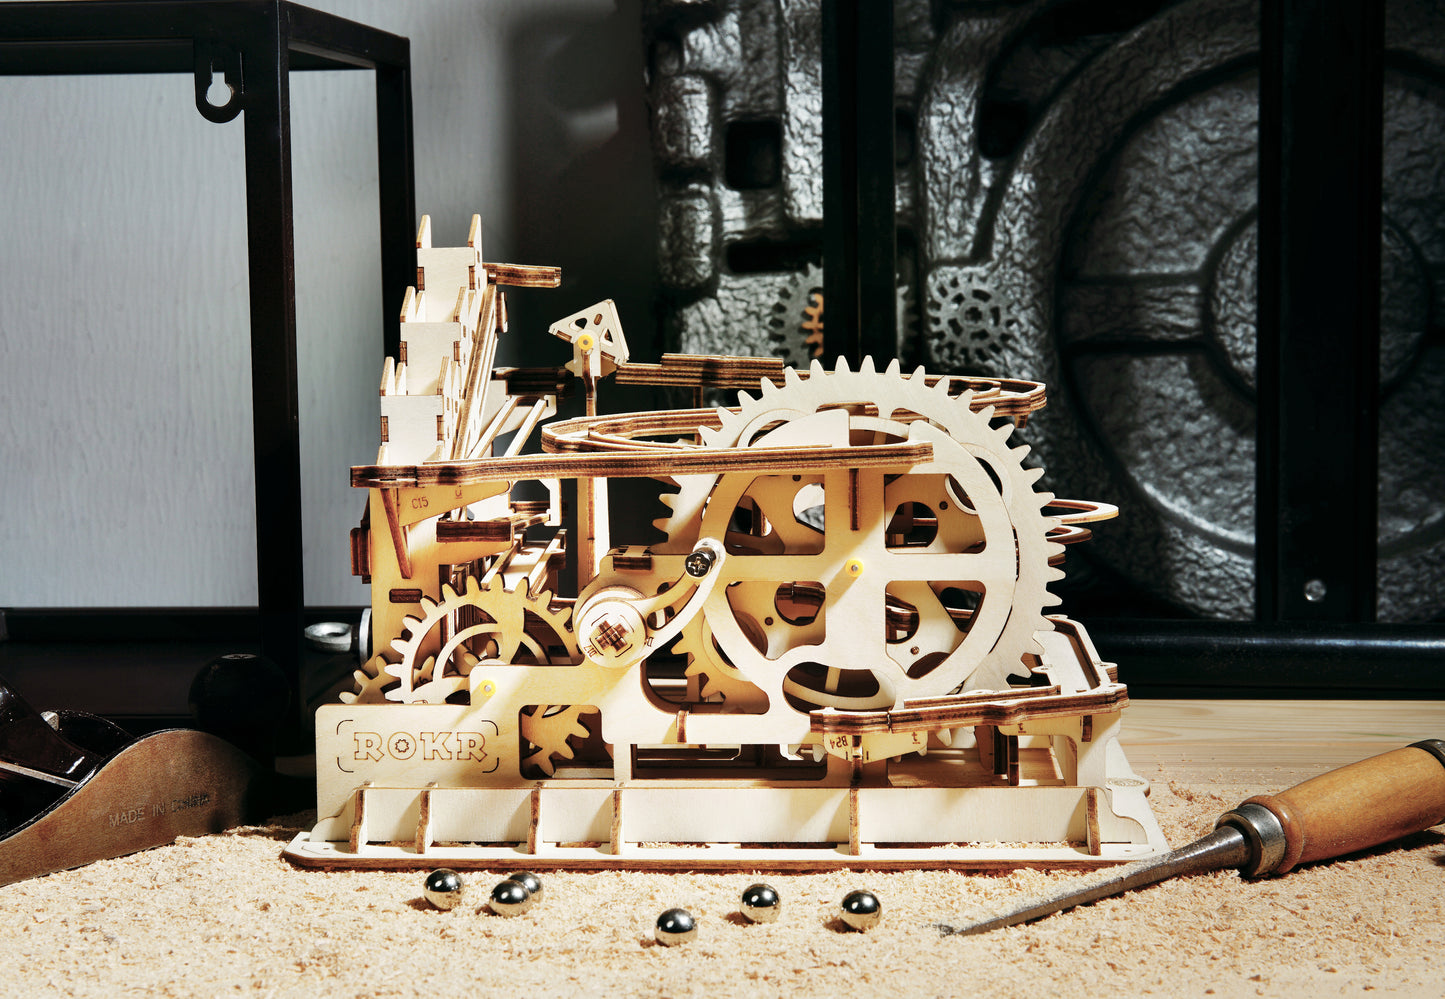 Robotime DIY Wooden Toy - Marble Run - Parkour - Woodylands Crafts